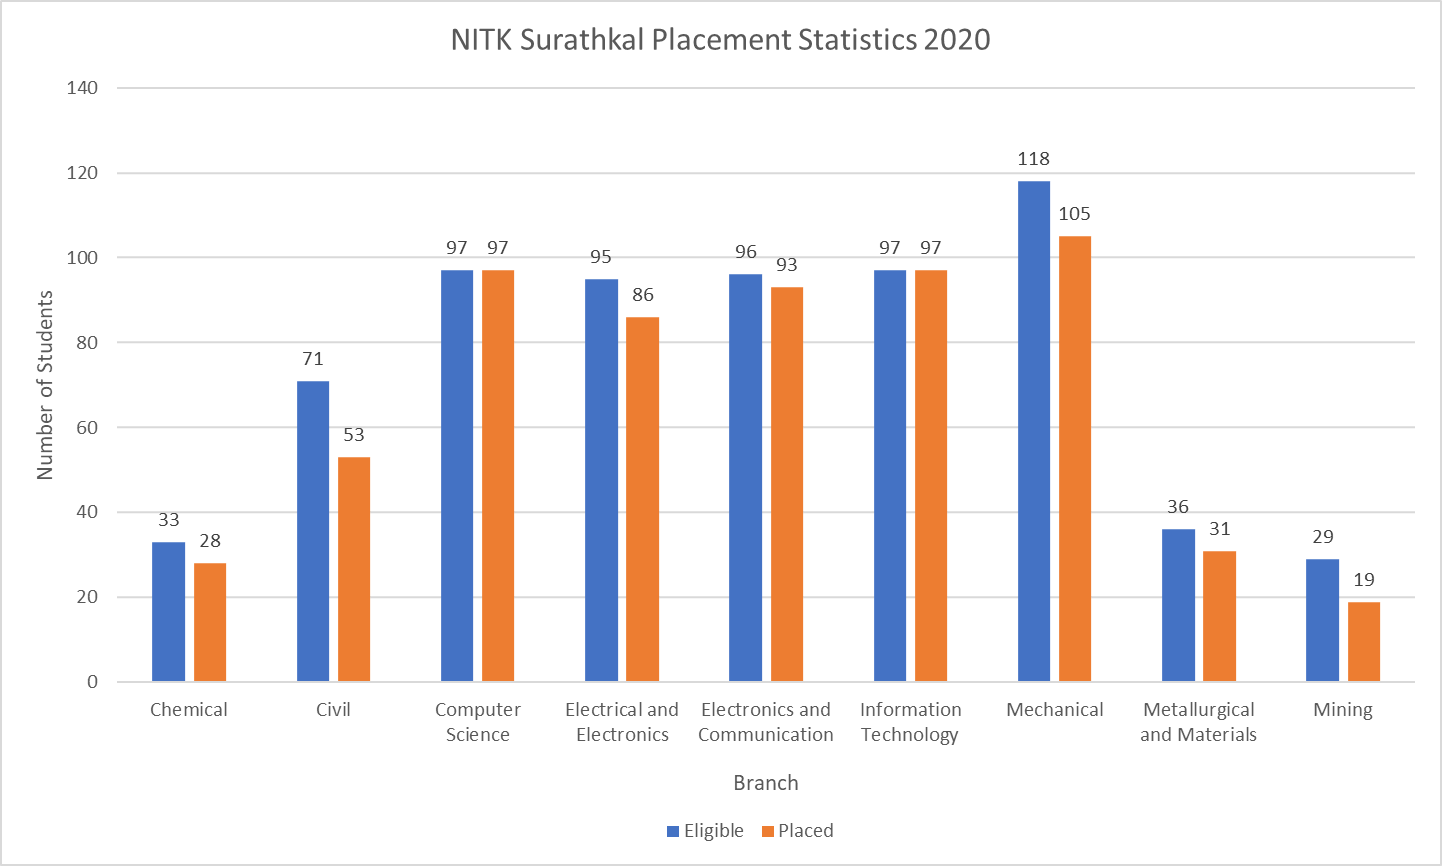 NITK Surathkal Placement Statistics 2020